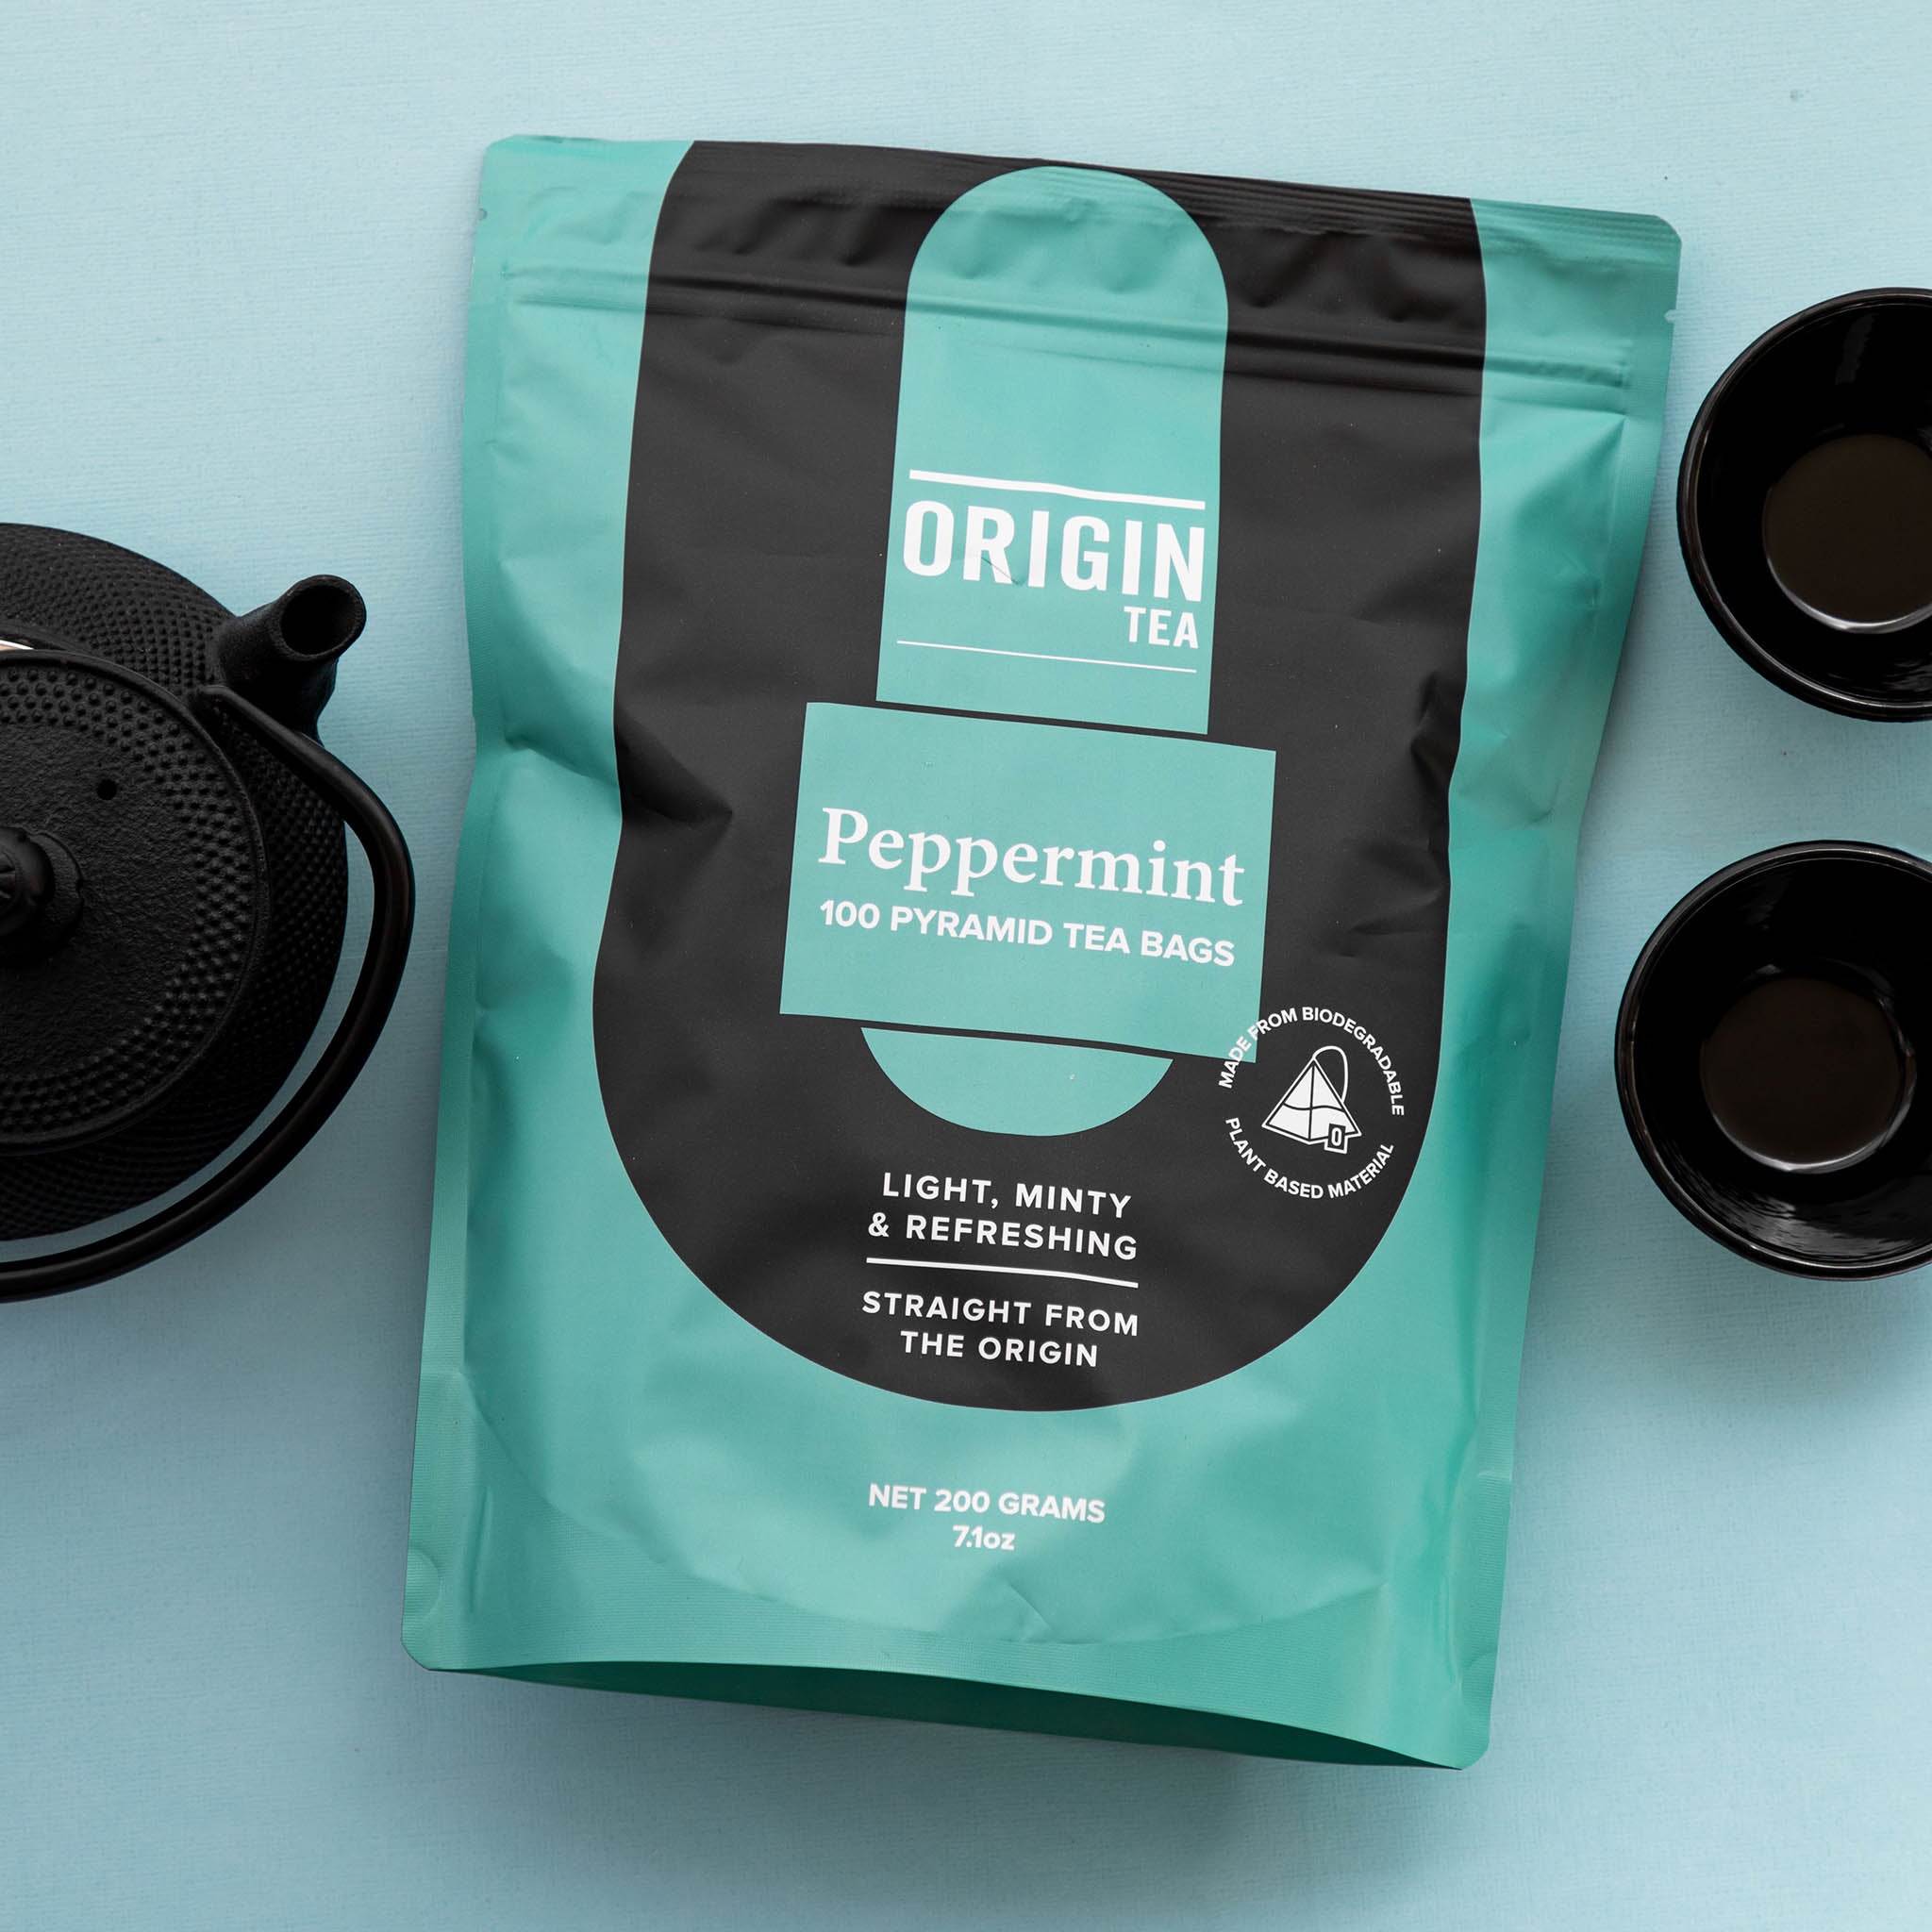 Peppermint Caffeine Free Pyramid Herbal Tea Bags - 100 Bags - Origin Tea